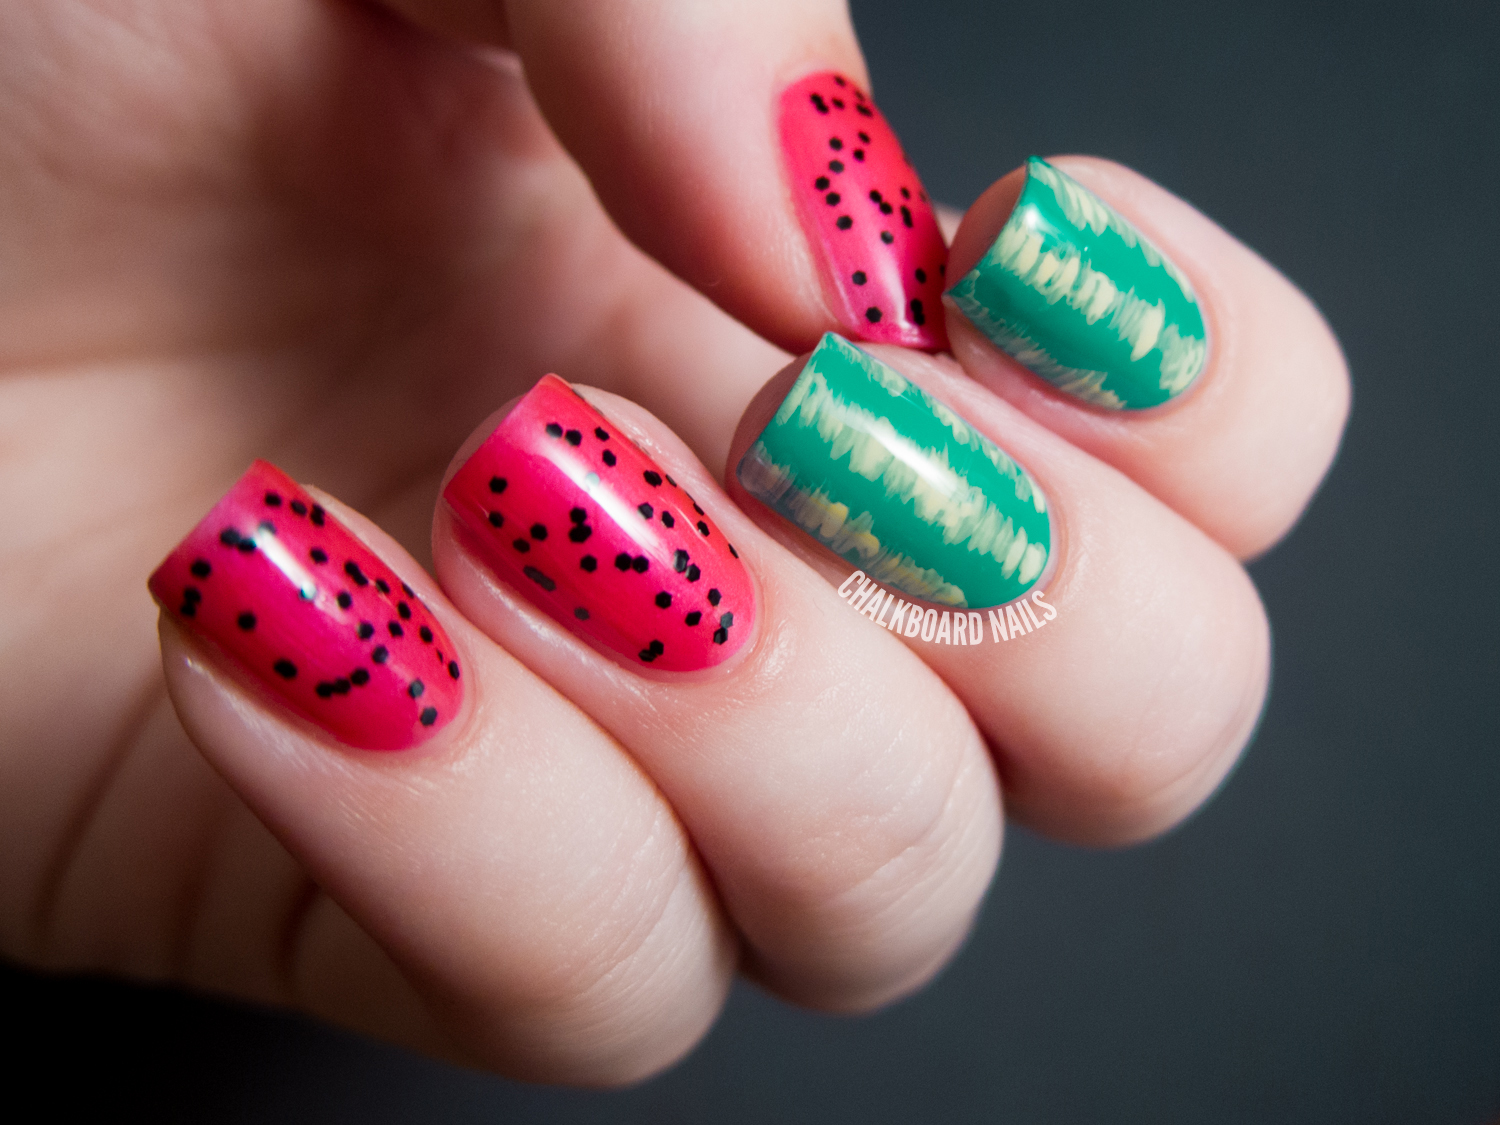 4. Watermelon Nail Art - wide 8